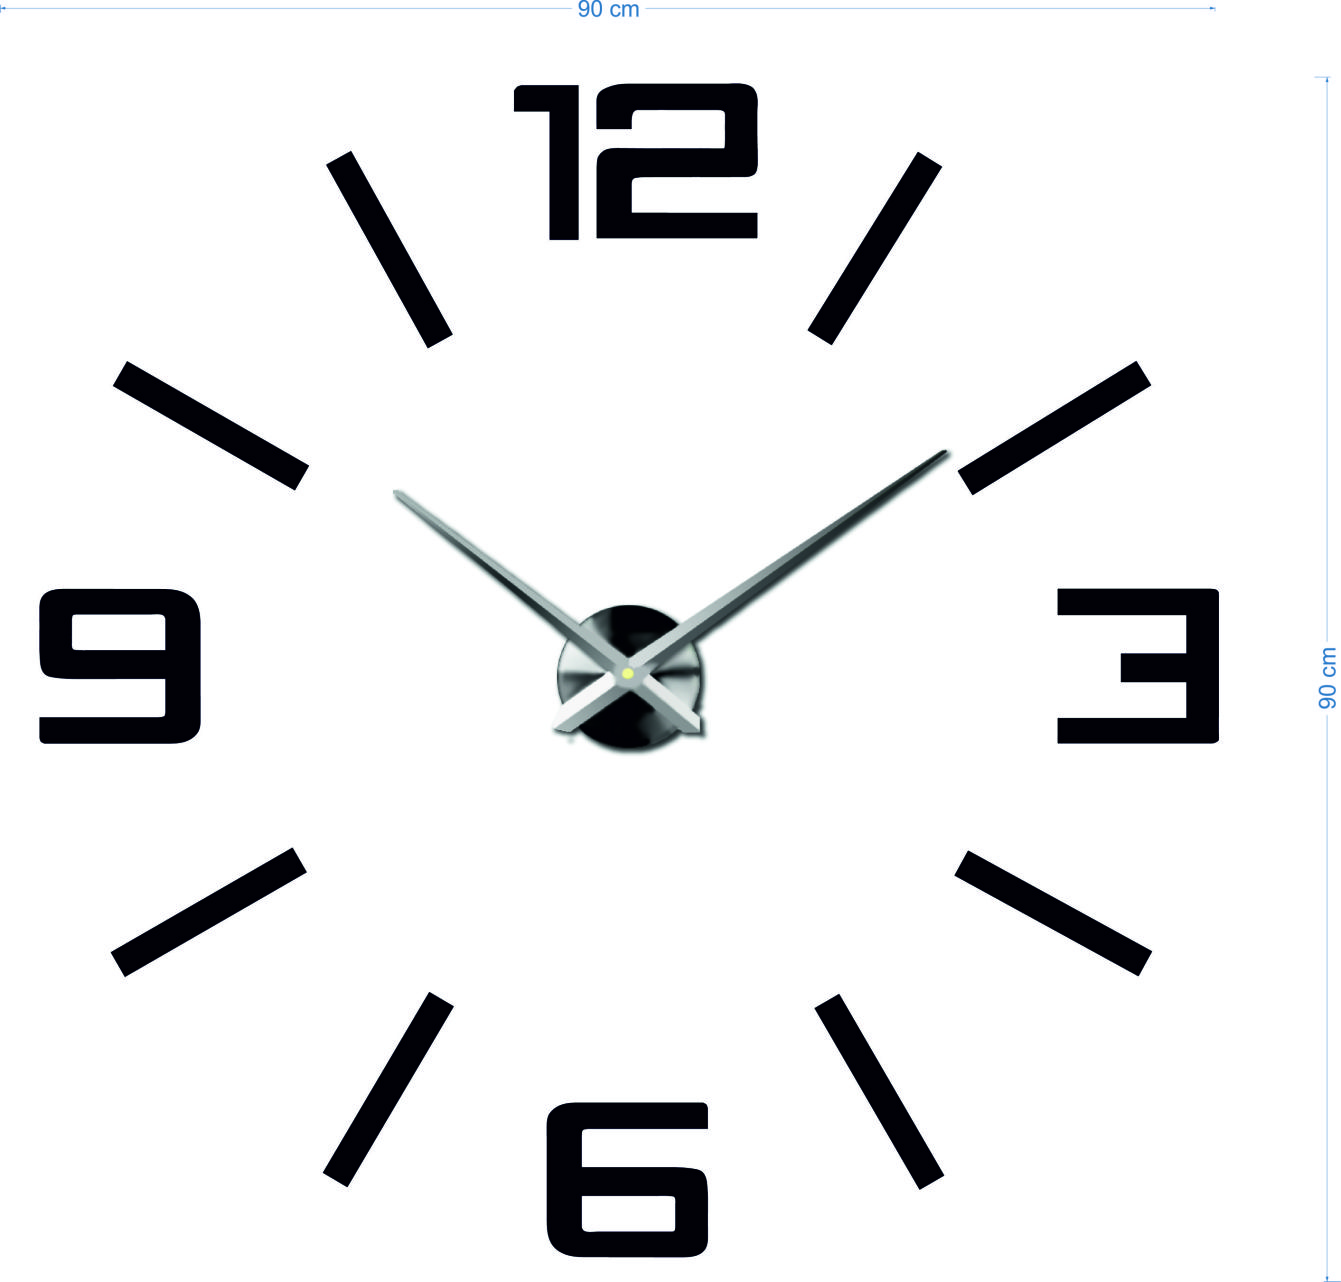 Clock size